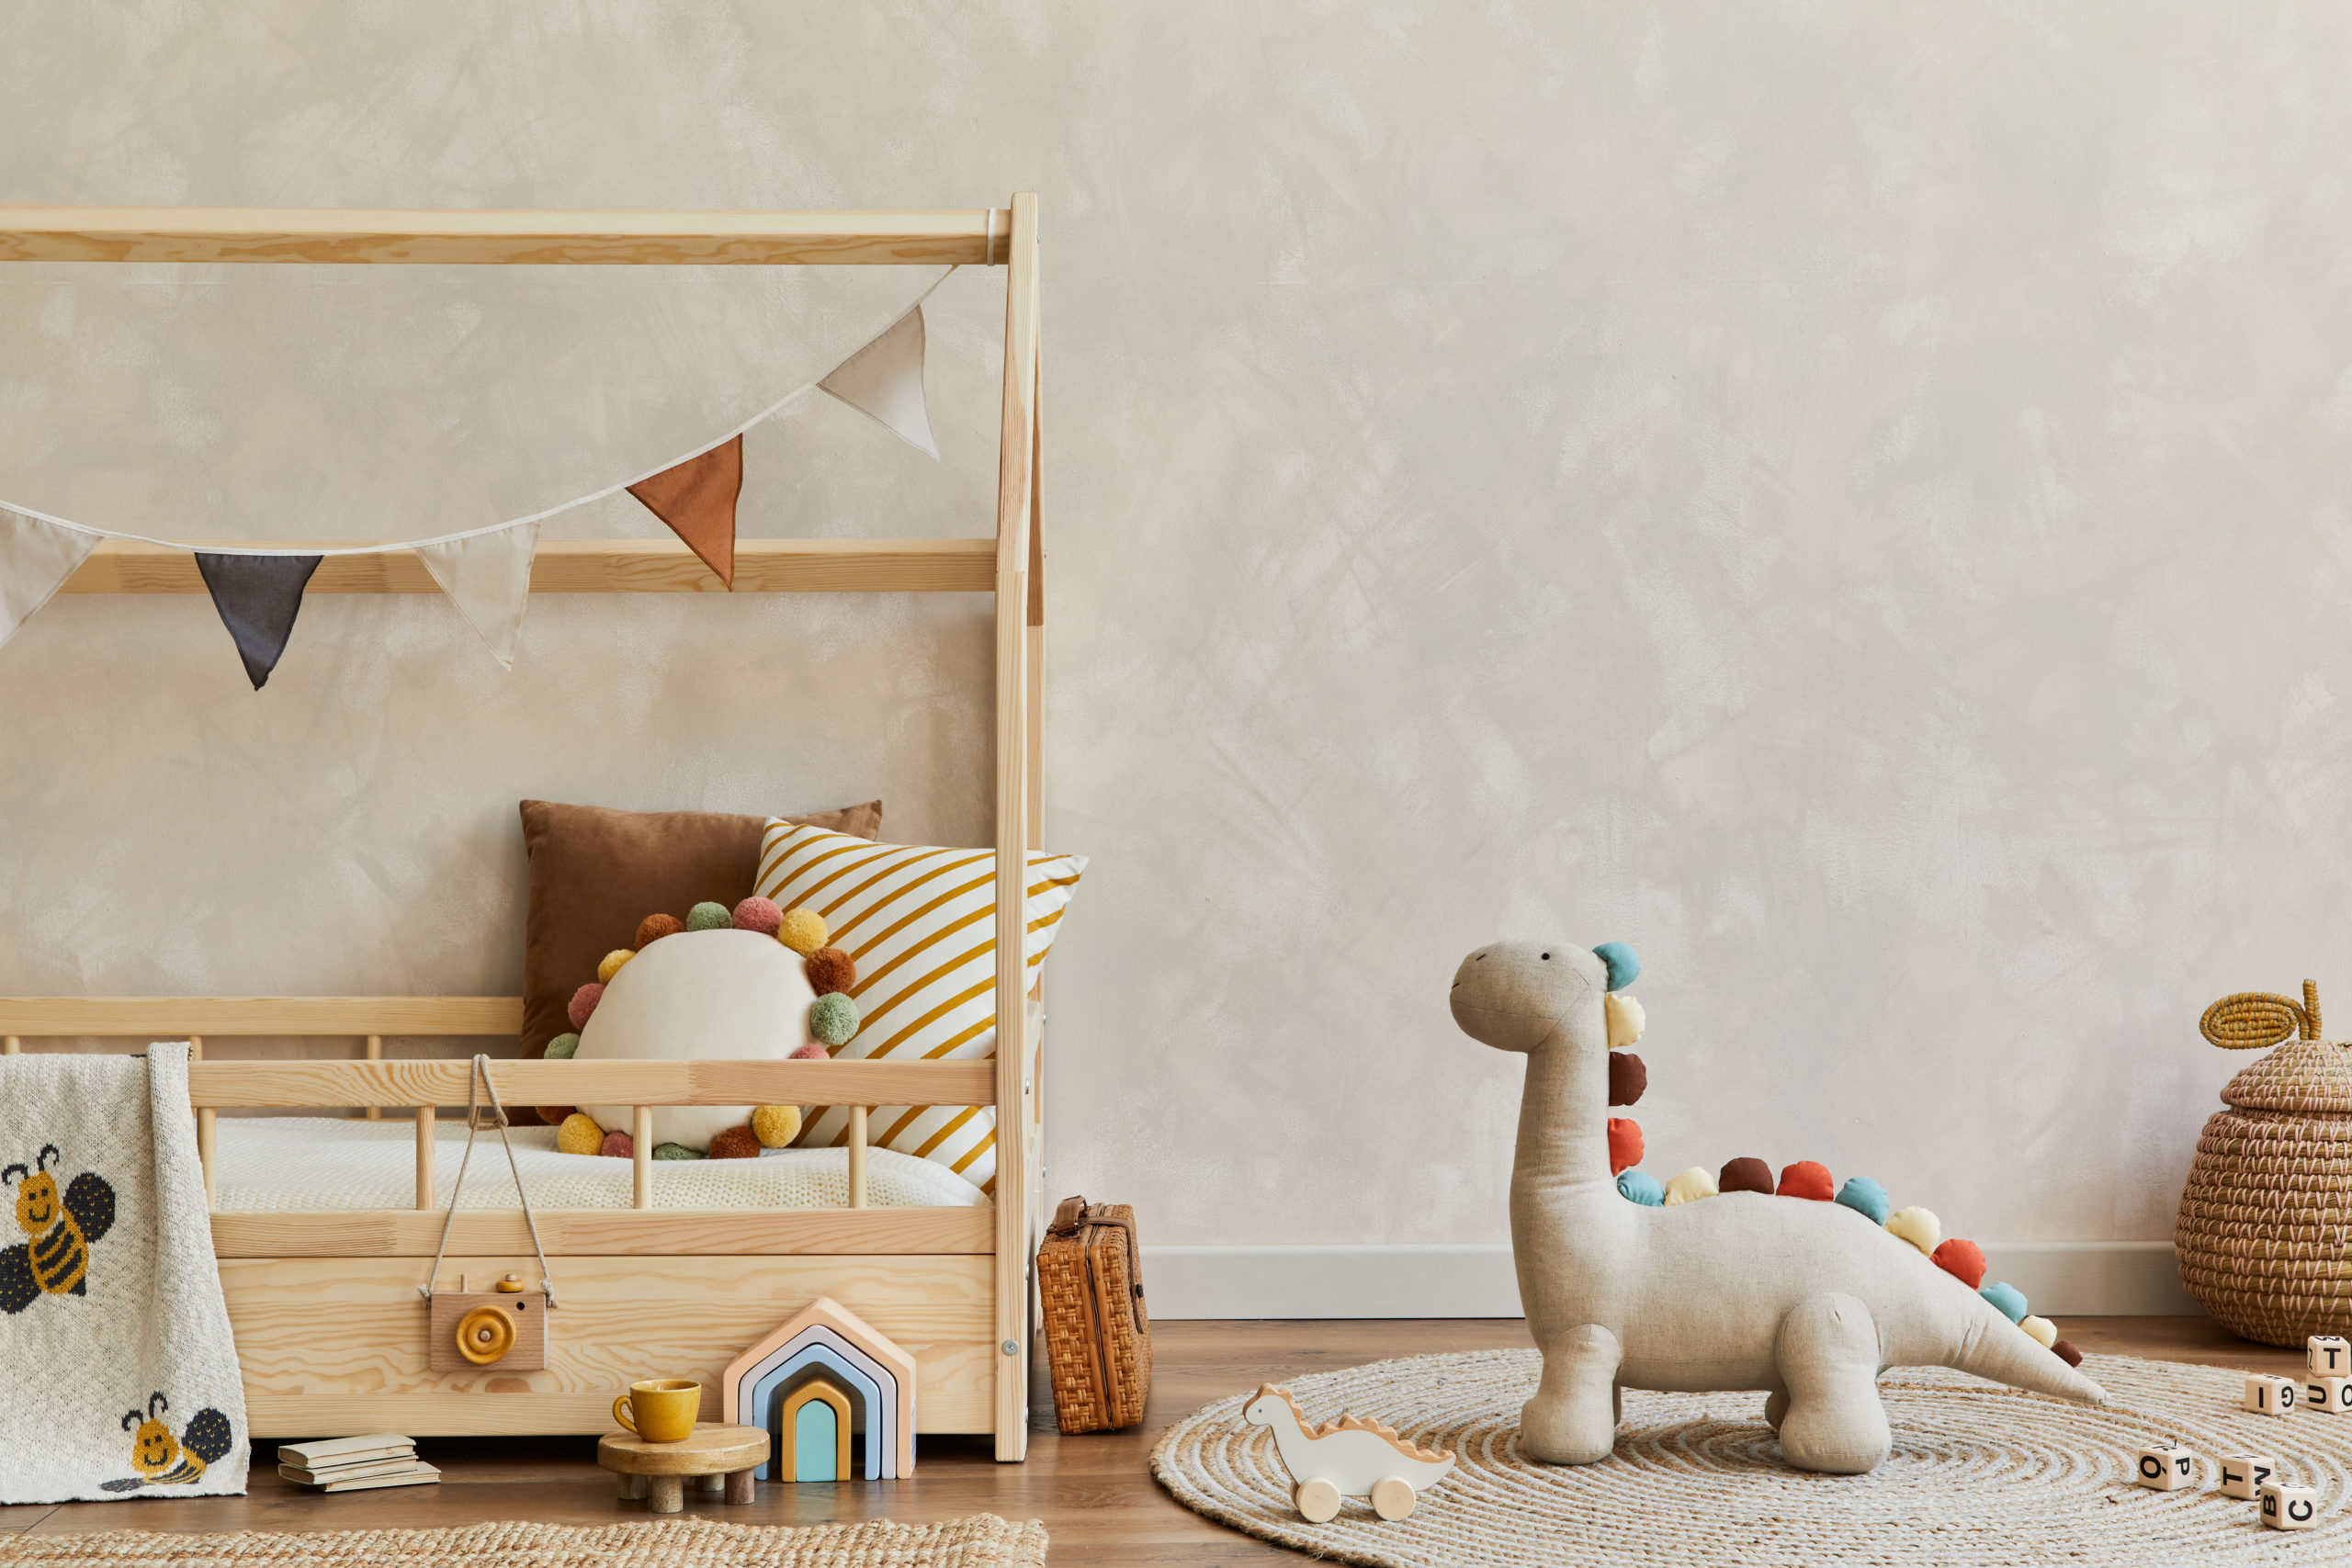 Stylish composition of cozy scandinavian child’s room interior w